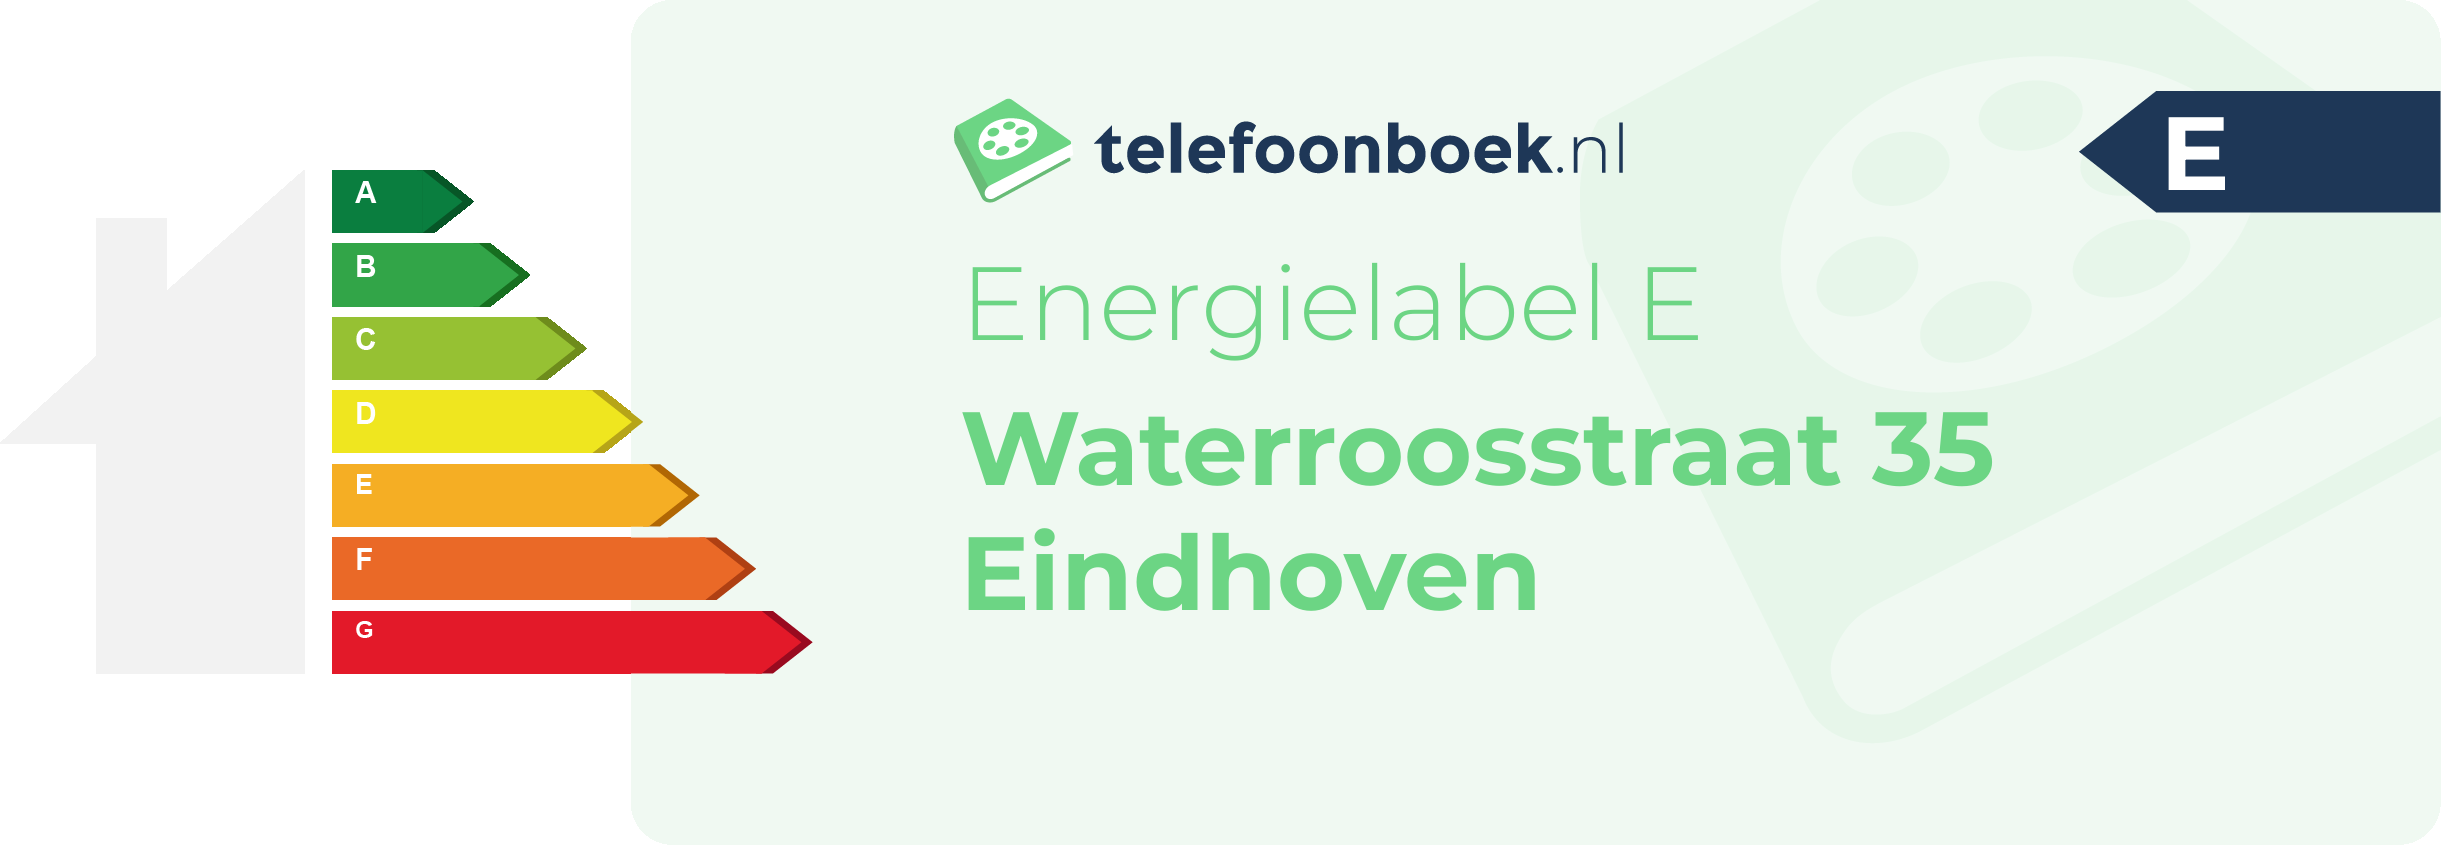 Energielabel Waterroosstraat 35 Eindhoven